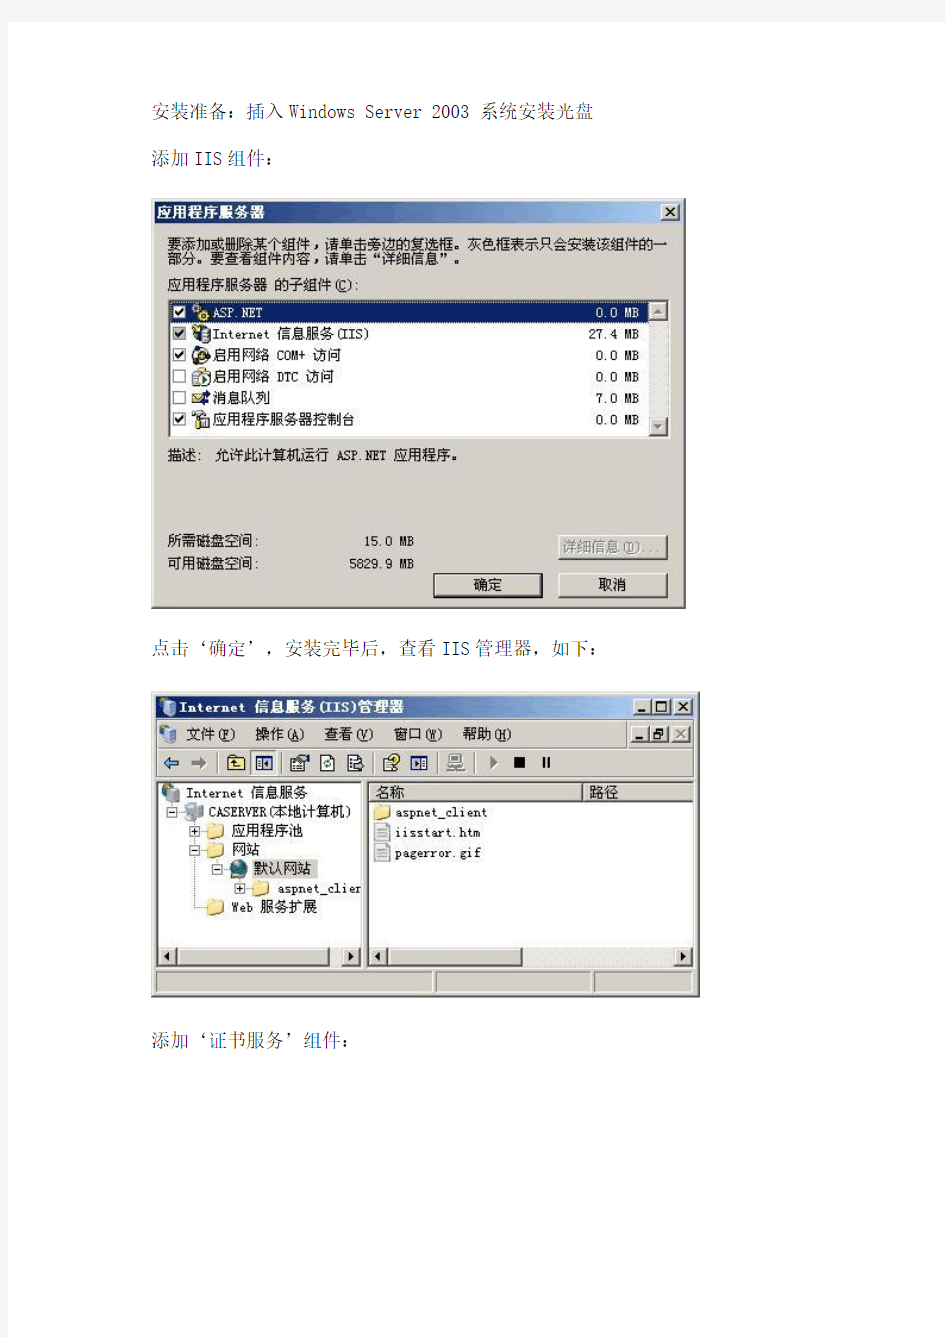 Windows CA 证书服务器配置